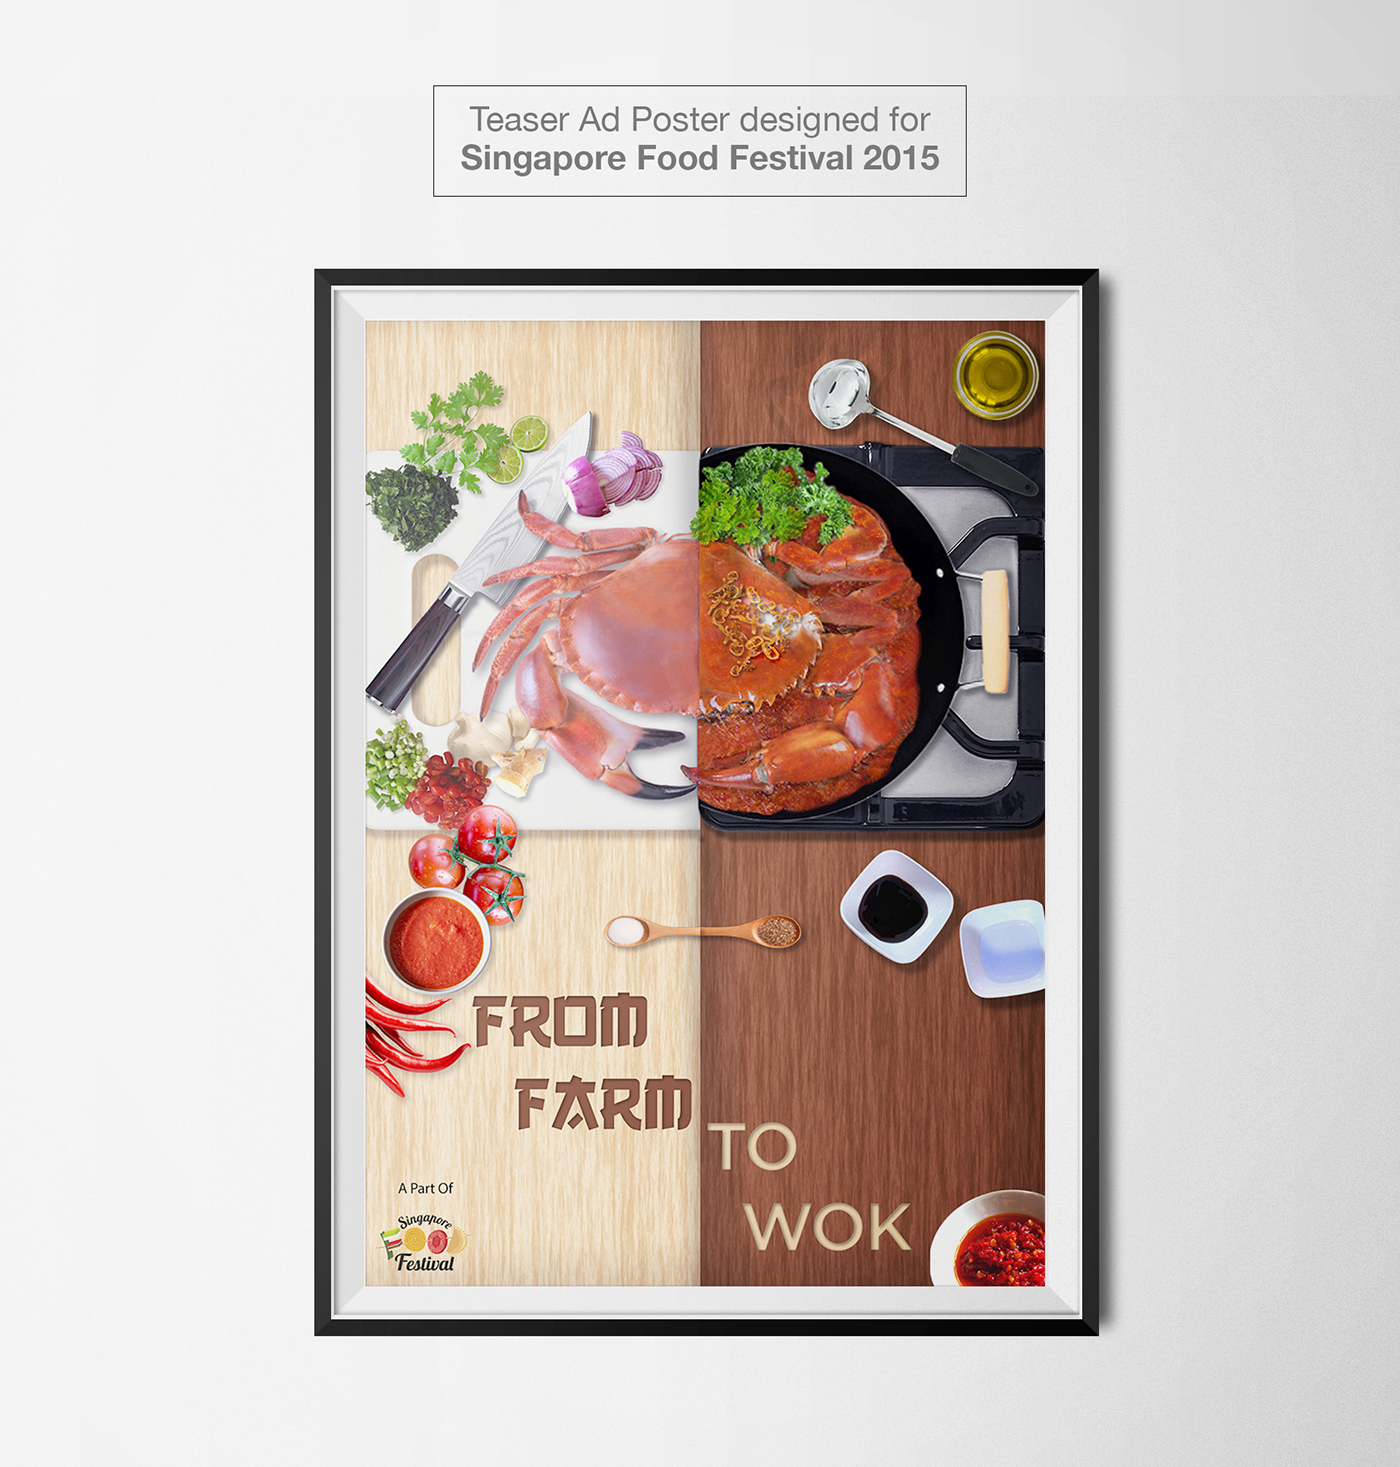 chili crab wok farm cook dish teaser ad poster